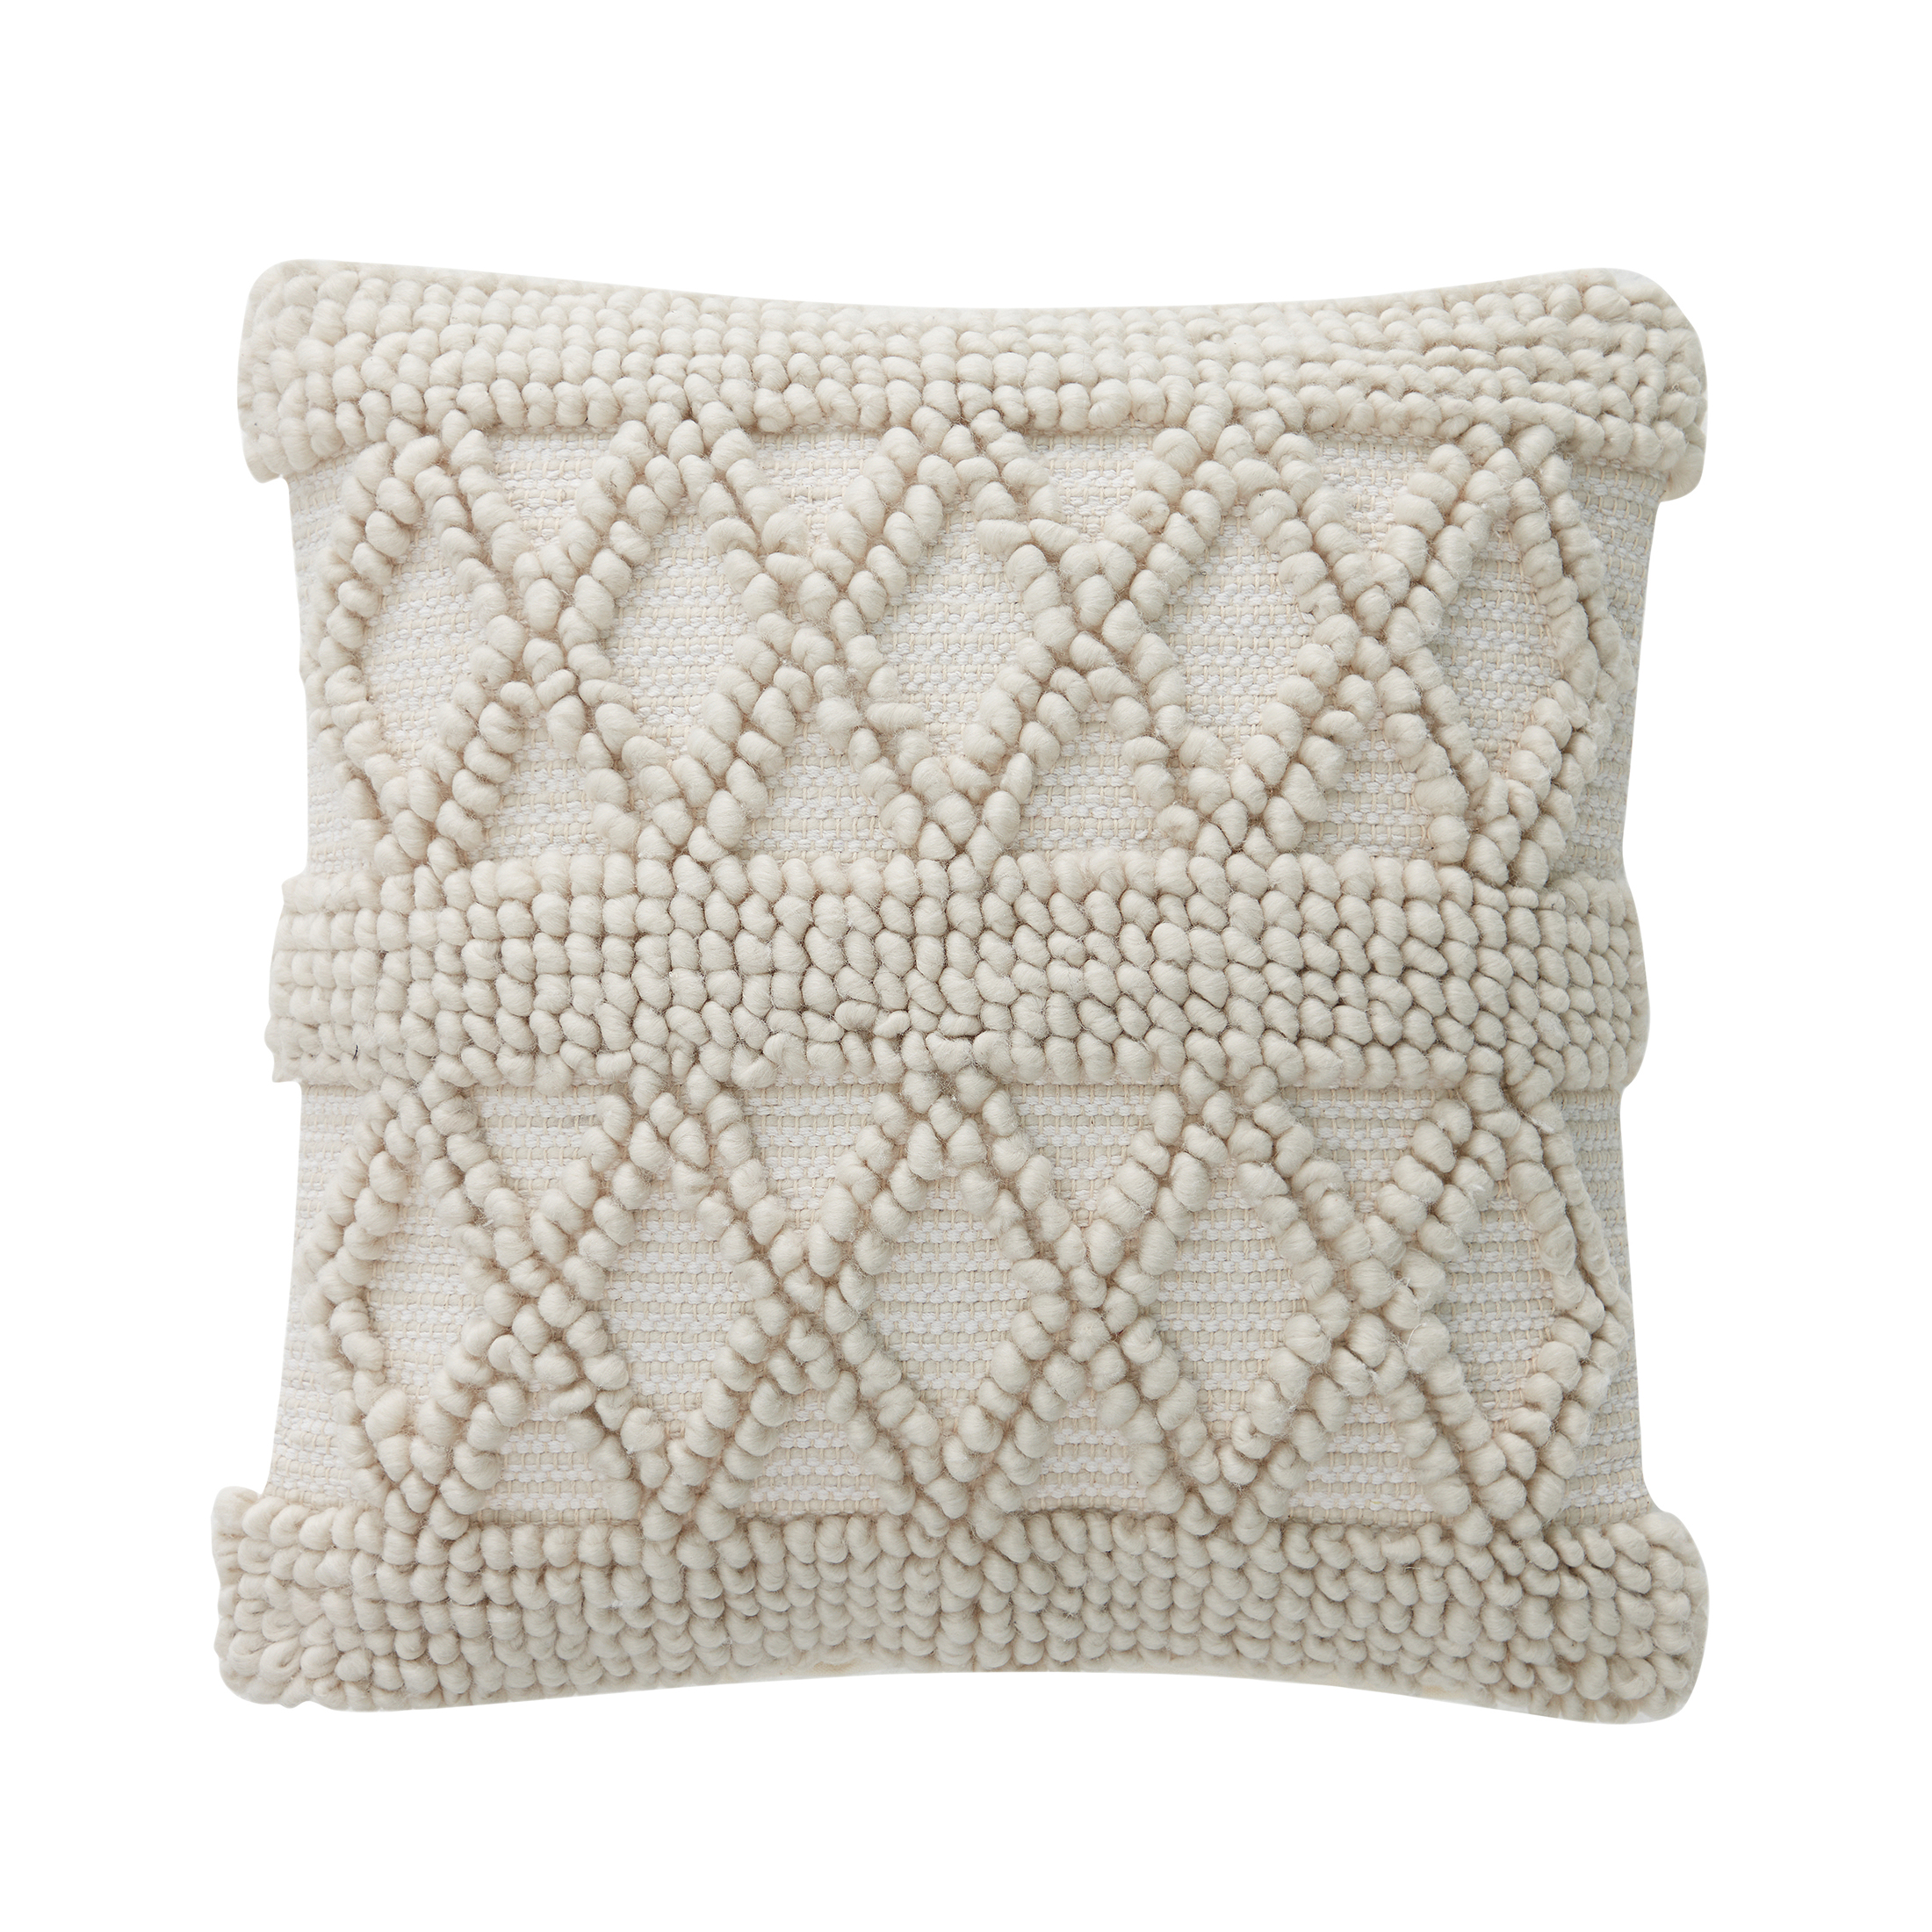 My Texas House Mckinney Woven Textured Diamond Stripe Square Decorative Pillow Cover, 20" X 20", Coconut Milk - image 1 of 12